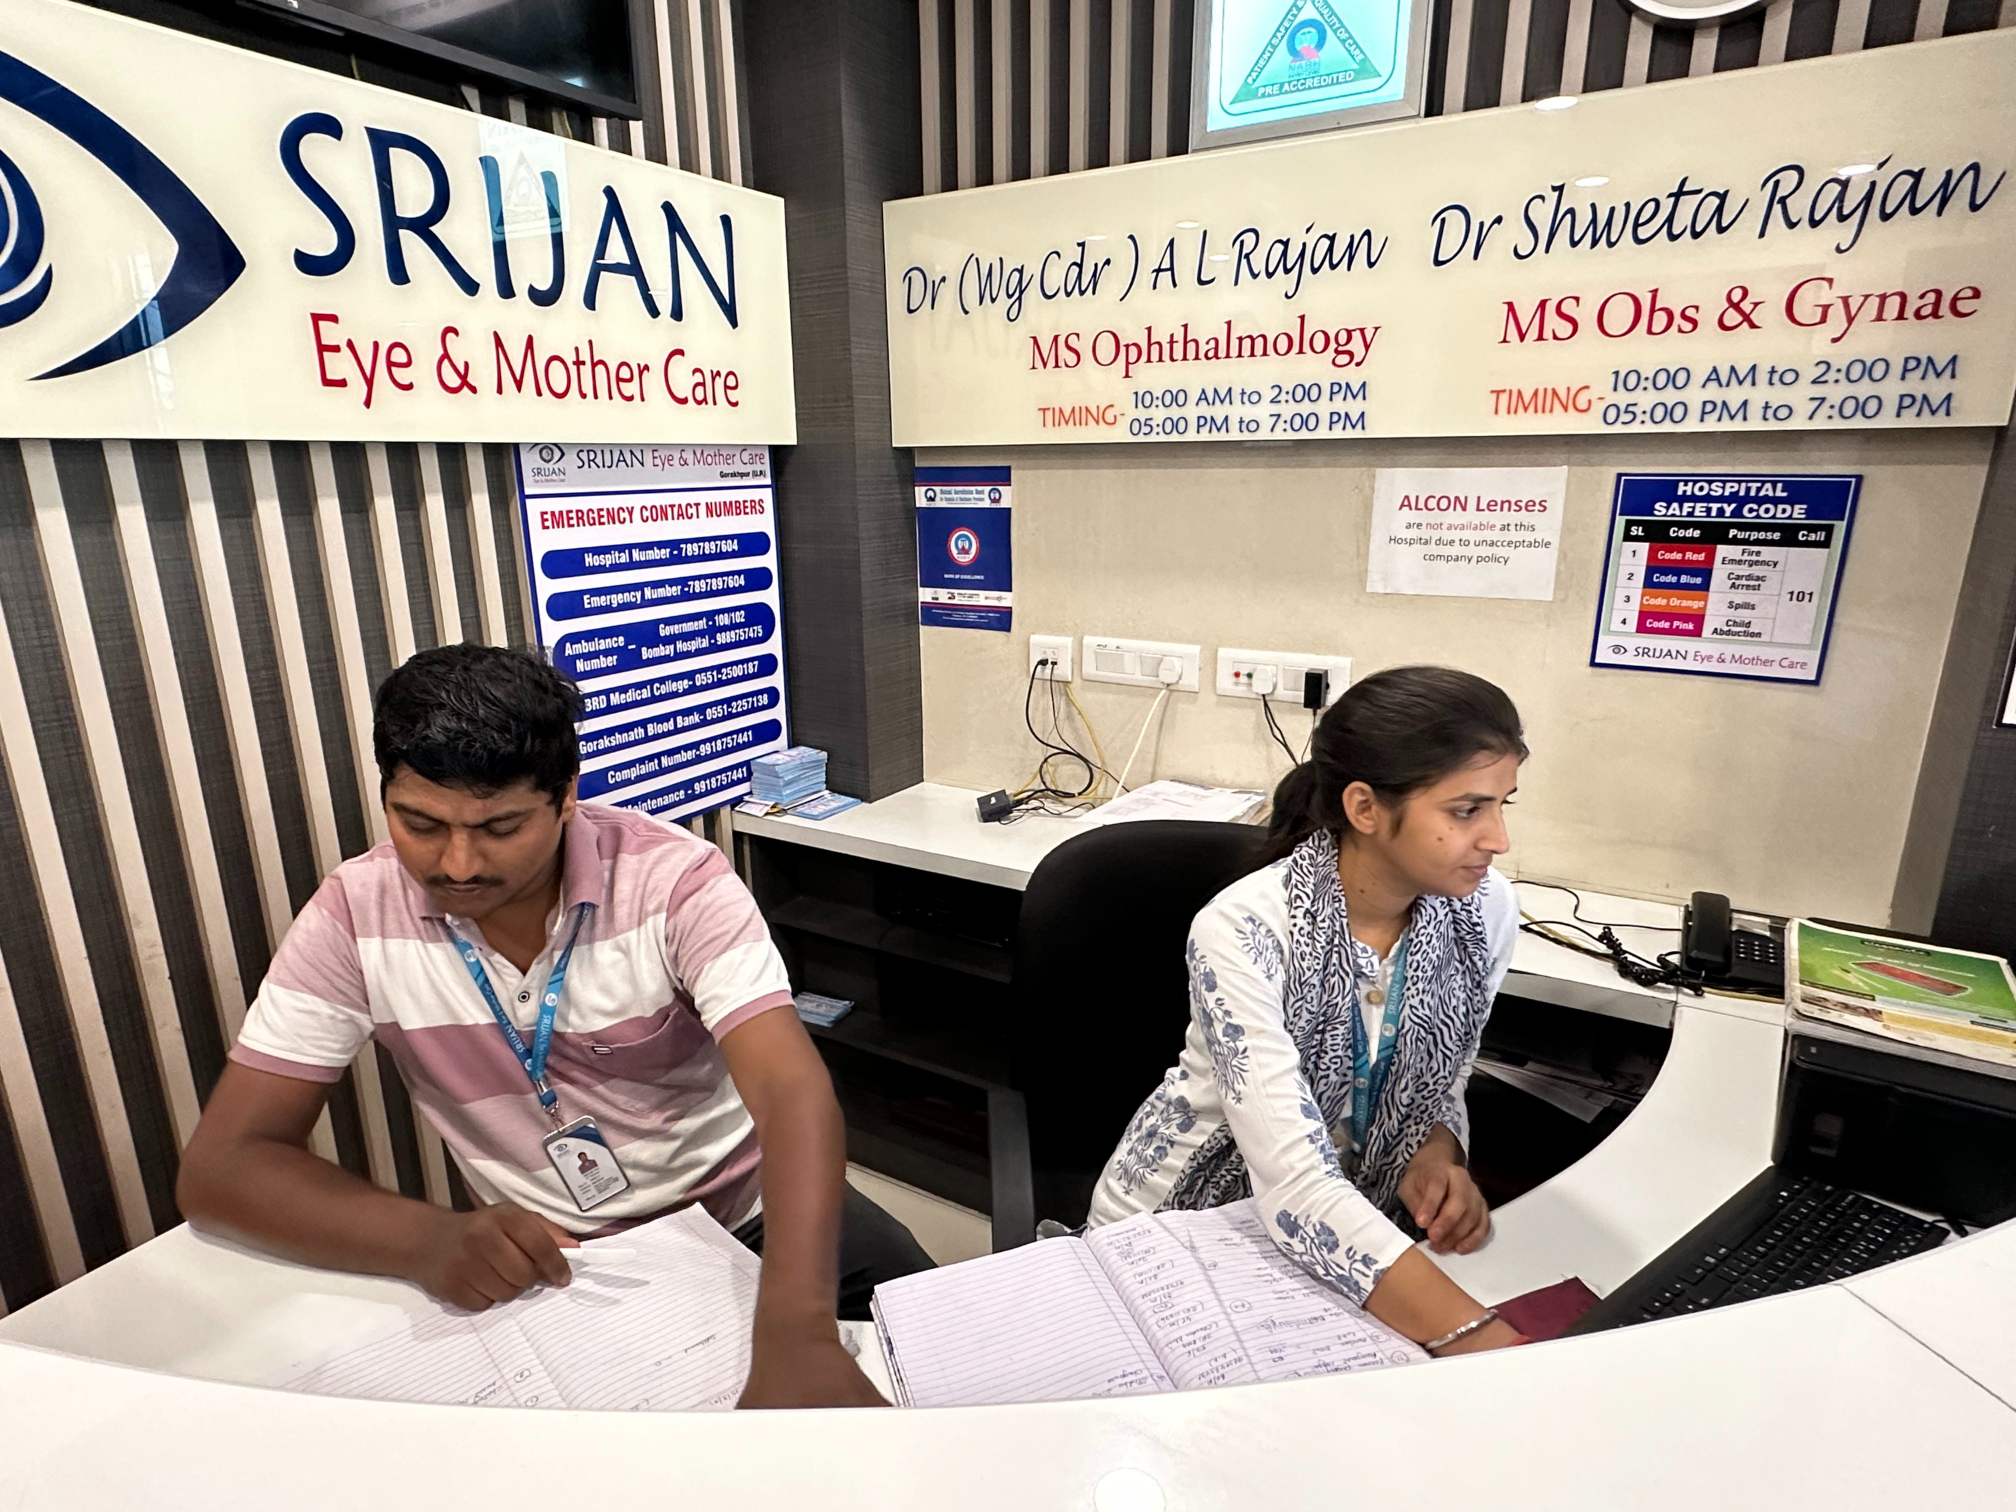 Srijan Eye & Mother Care